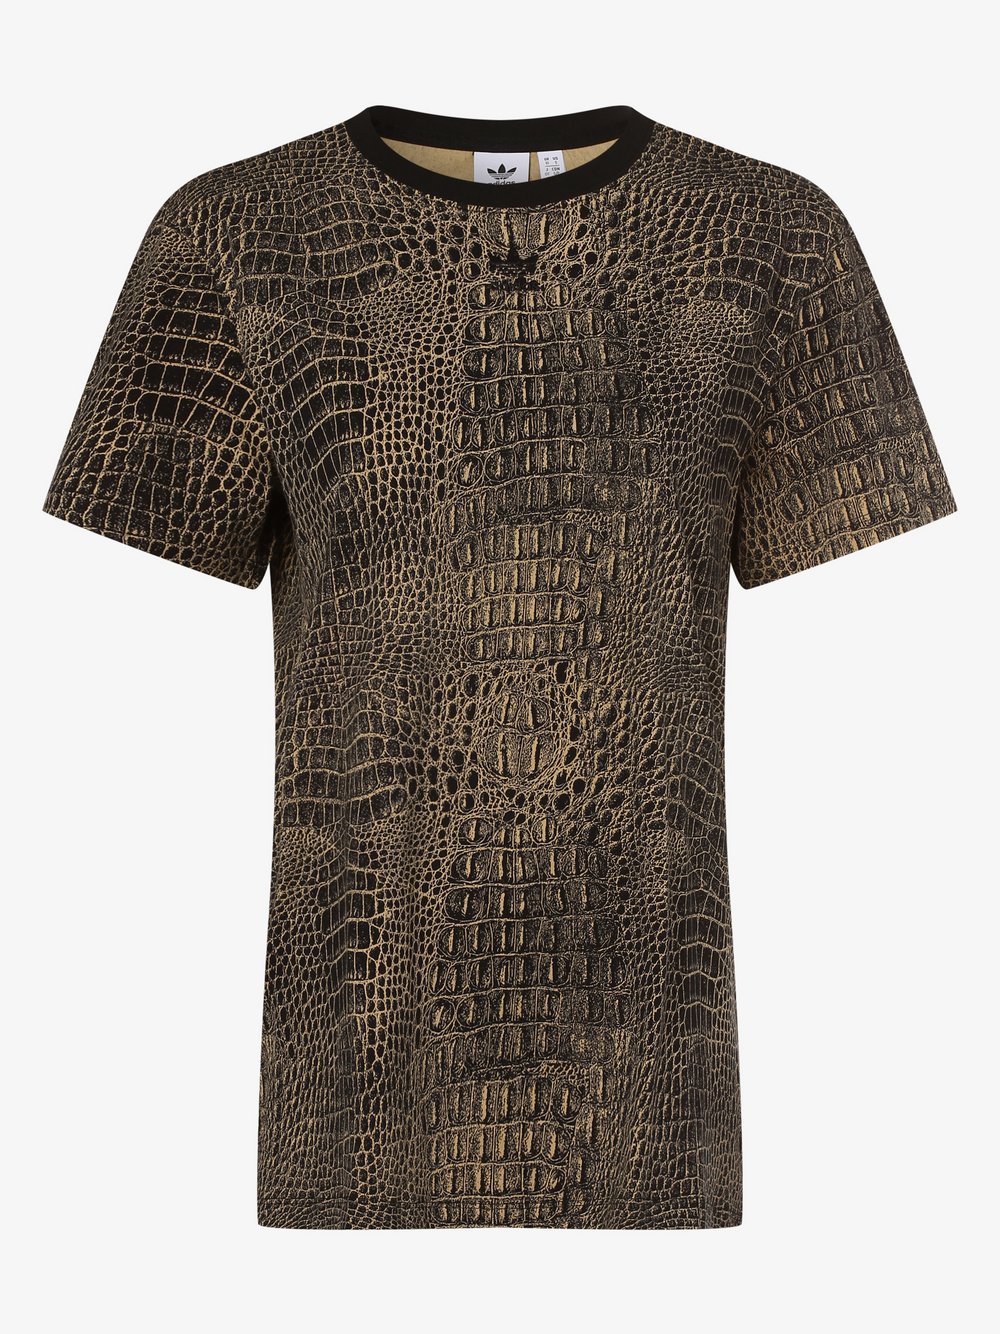 Adidas Originals - T-shirt damski, brązowy